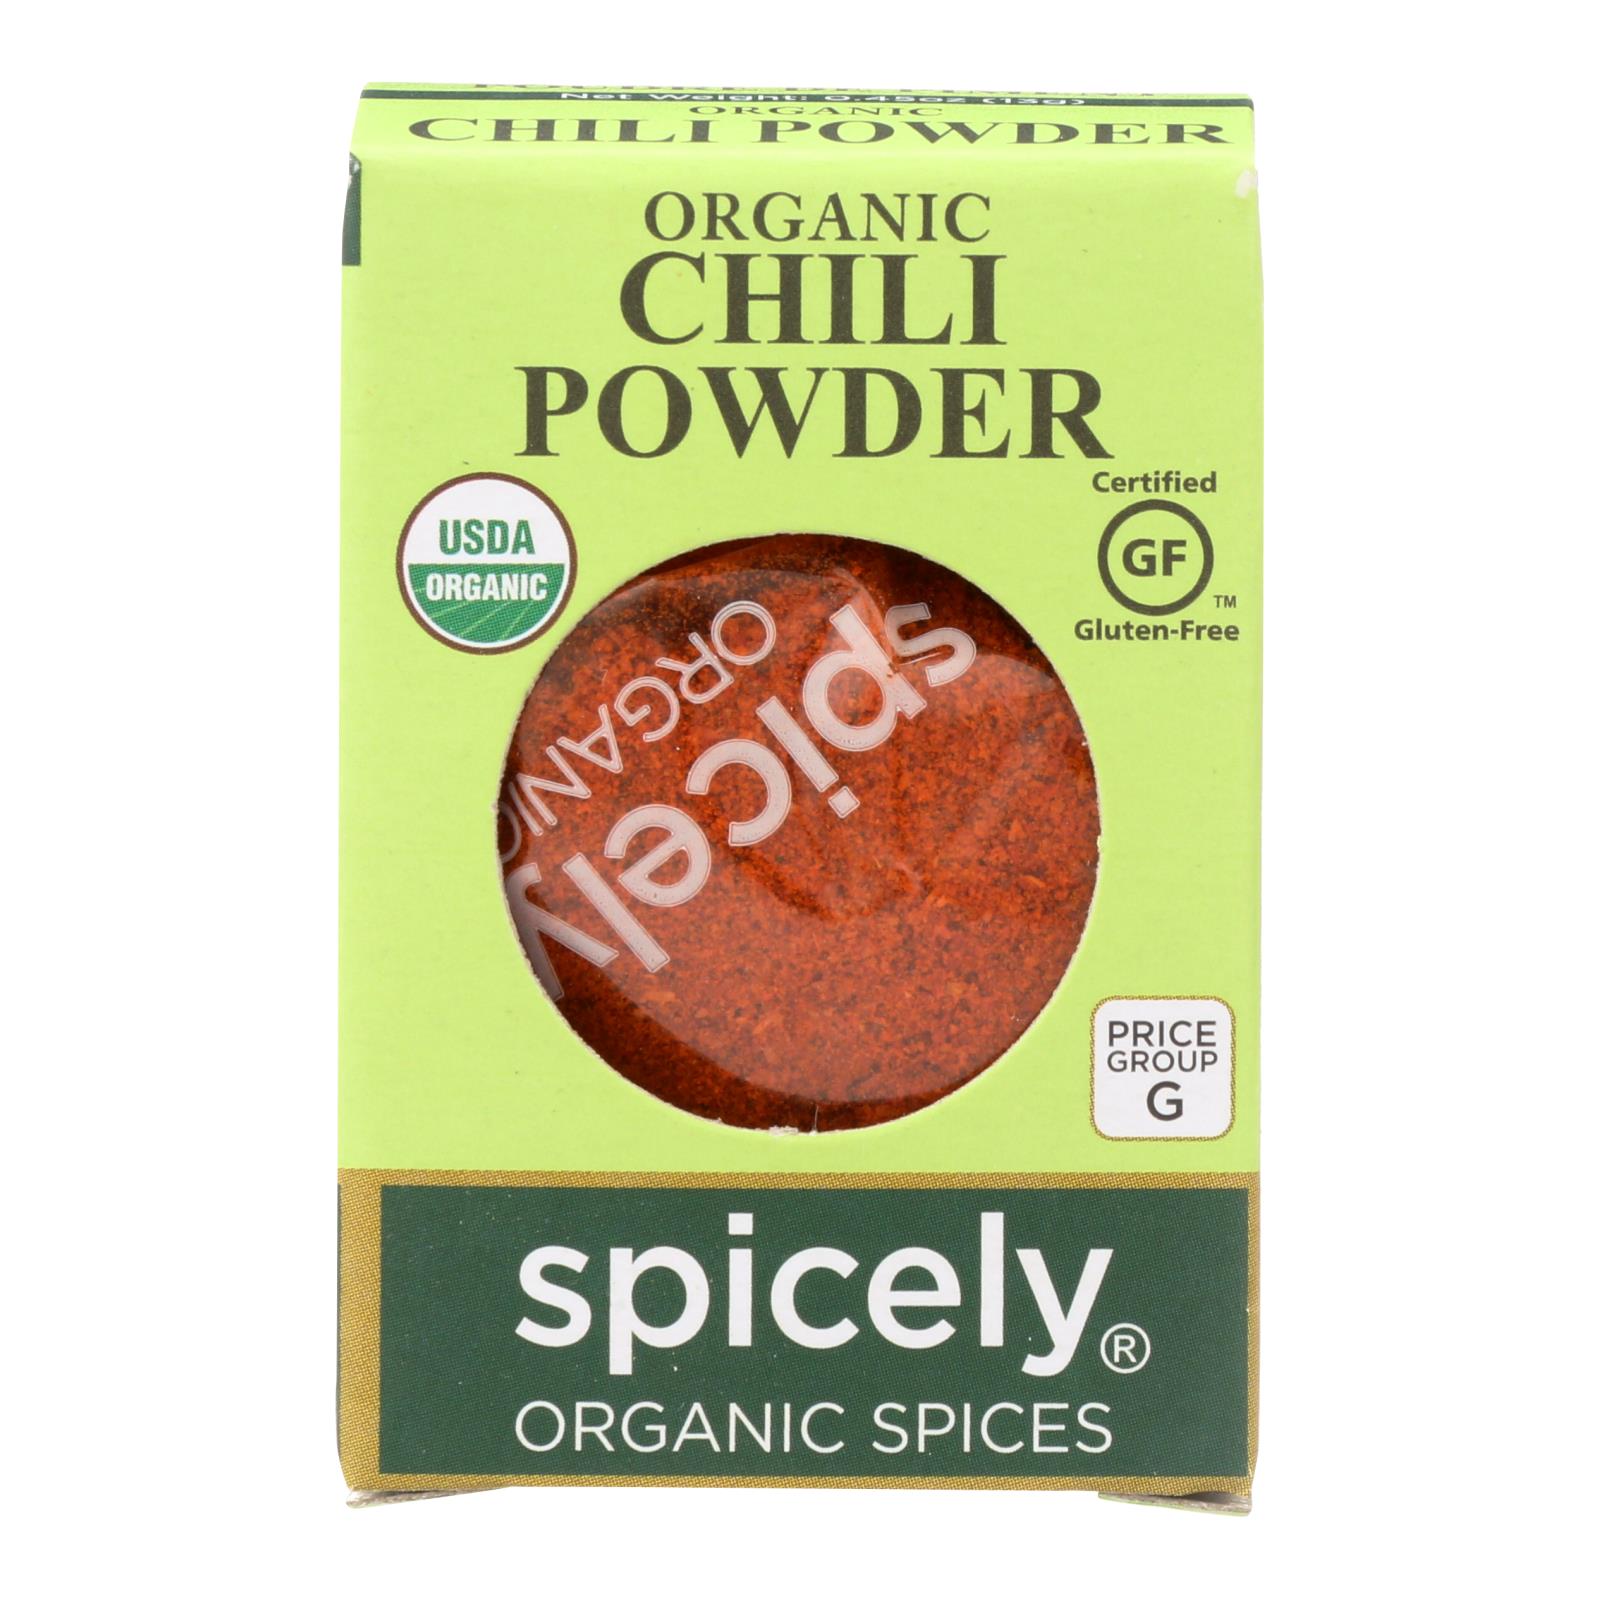 Spicely Organics - Organic Chili Powder - 6개 묶음상품 - 0.45 oz.